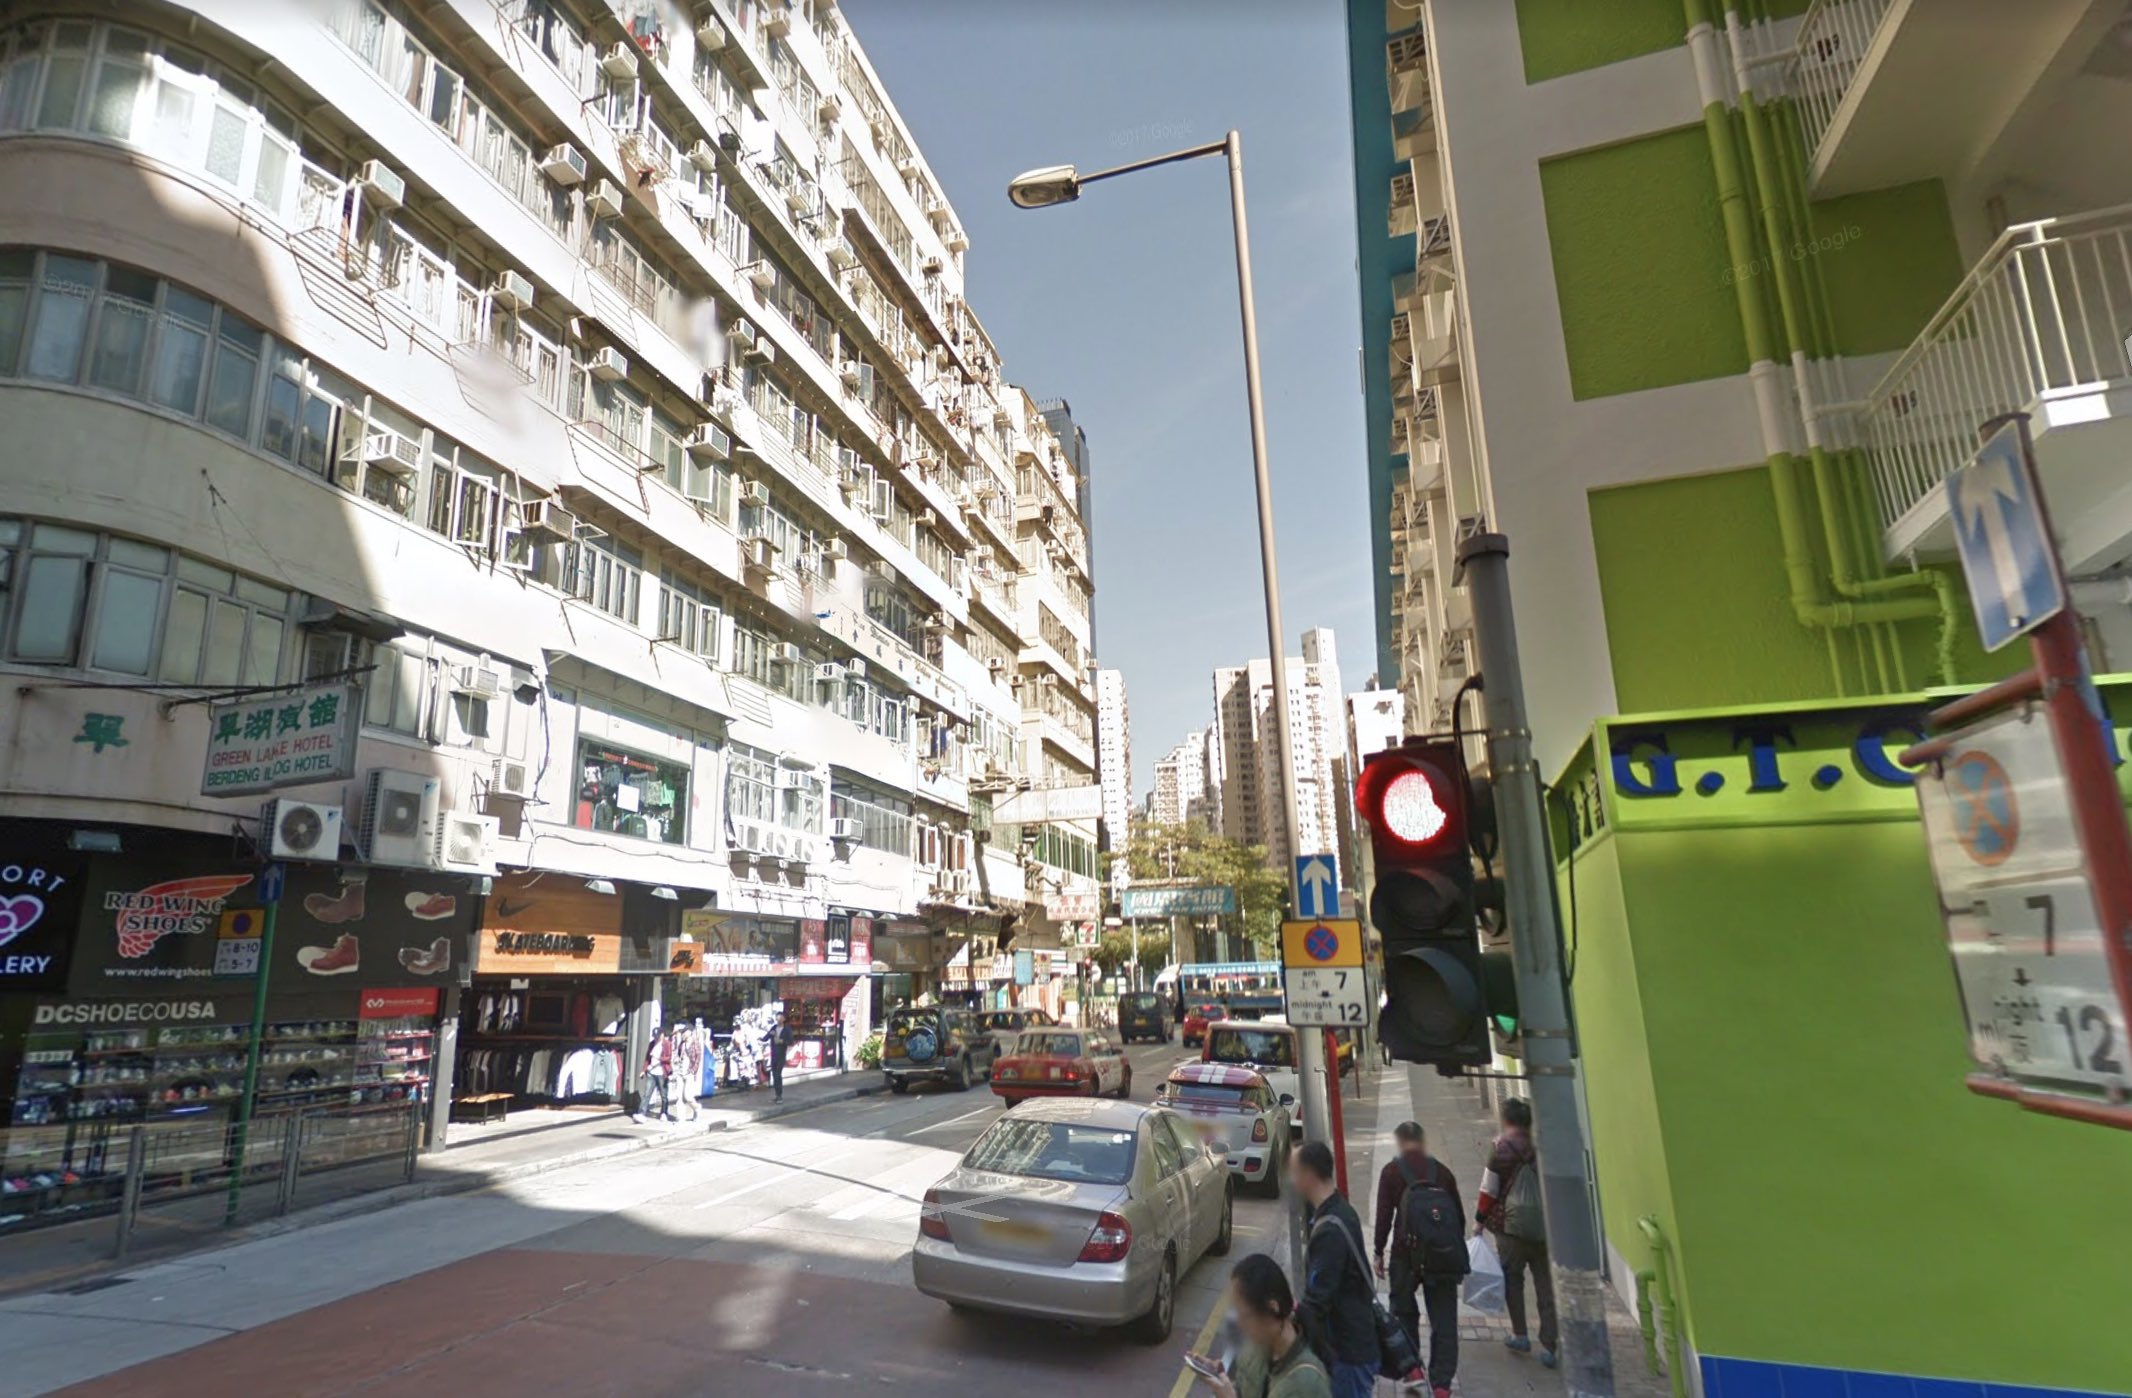 Shantung Street. Photo via Google Maps.